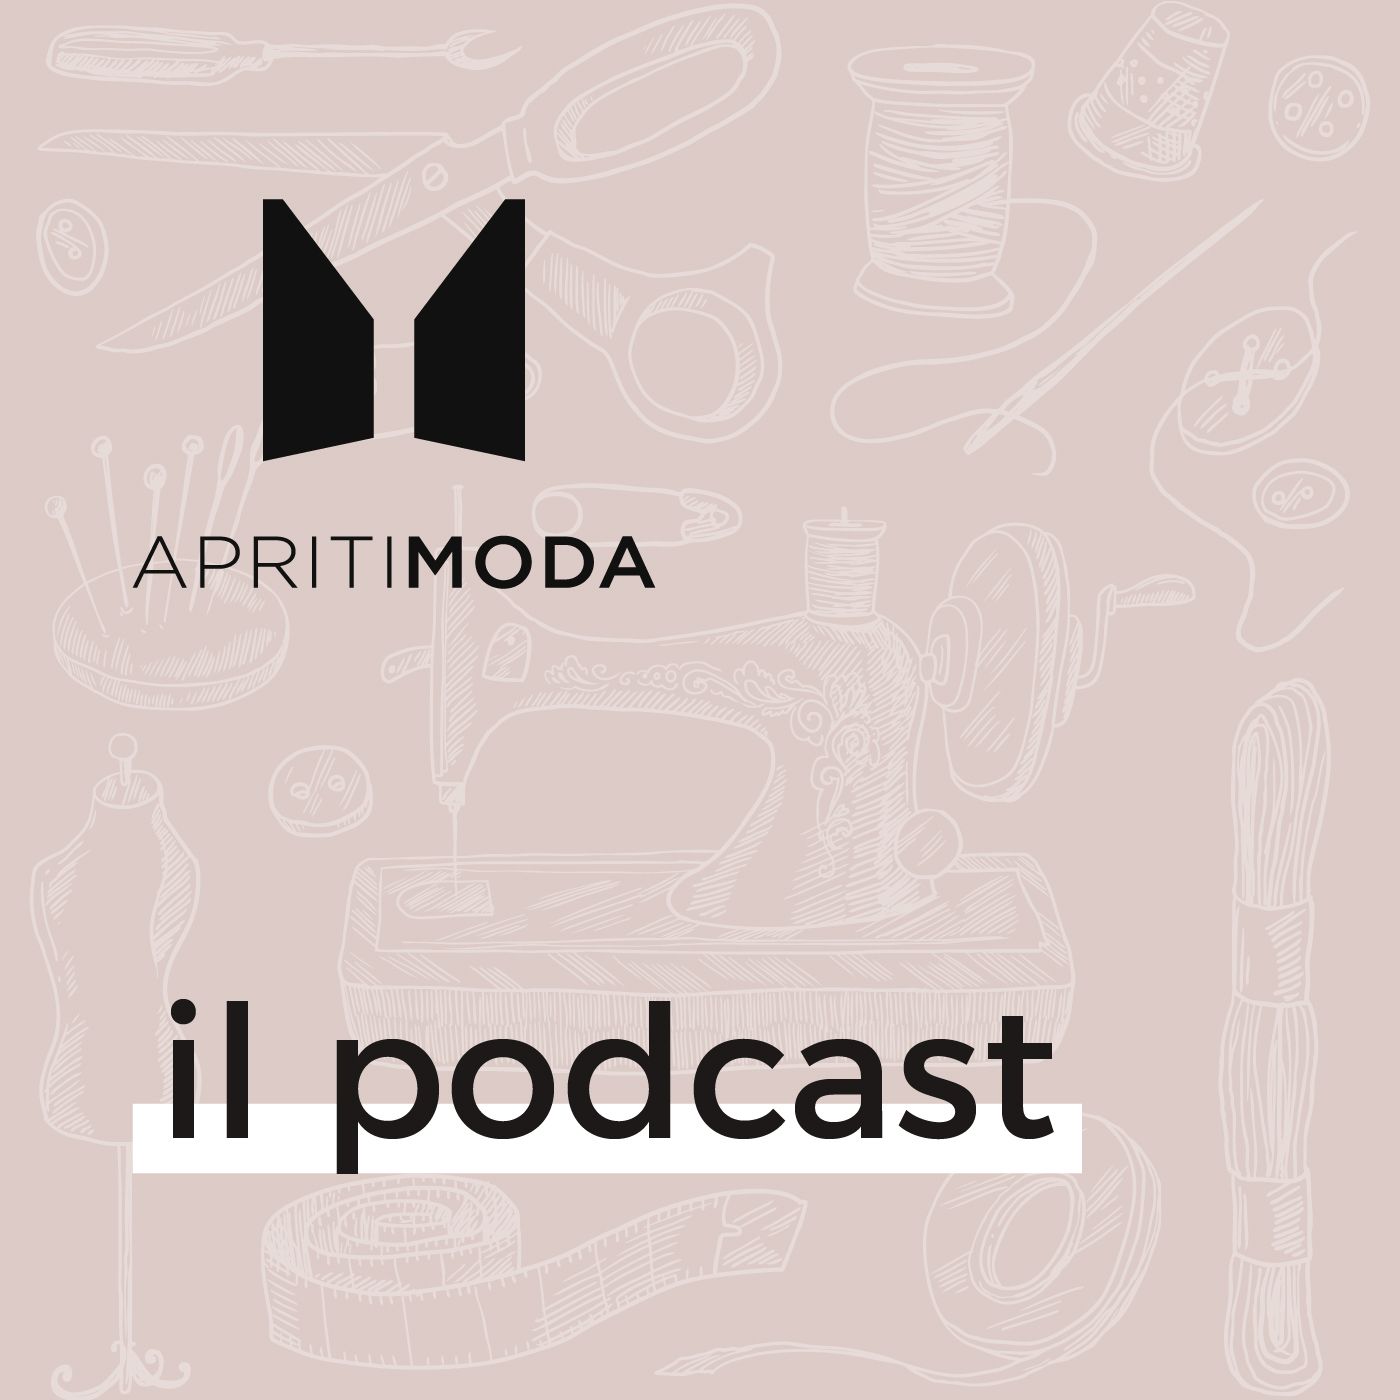 Dr Podcast - ApritiModa